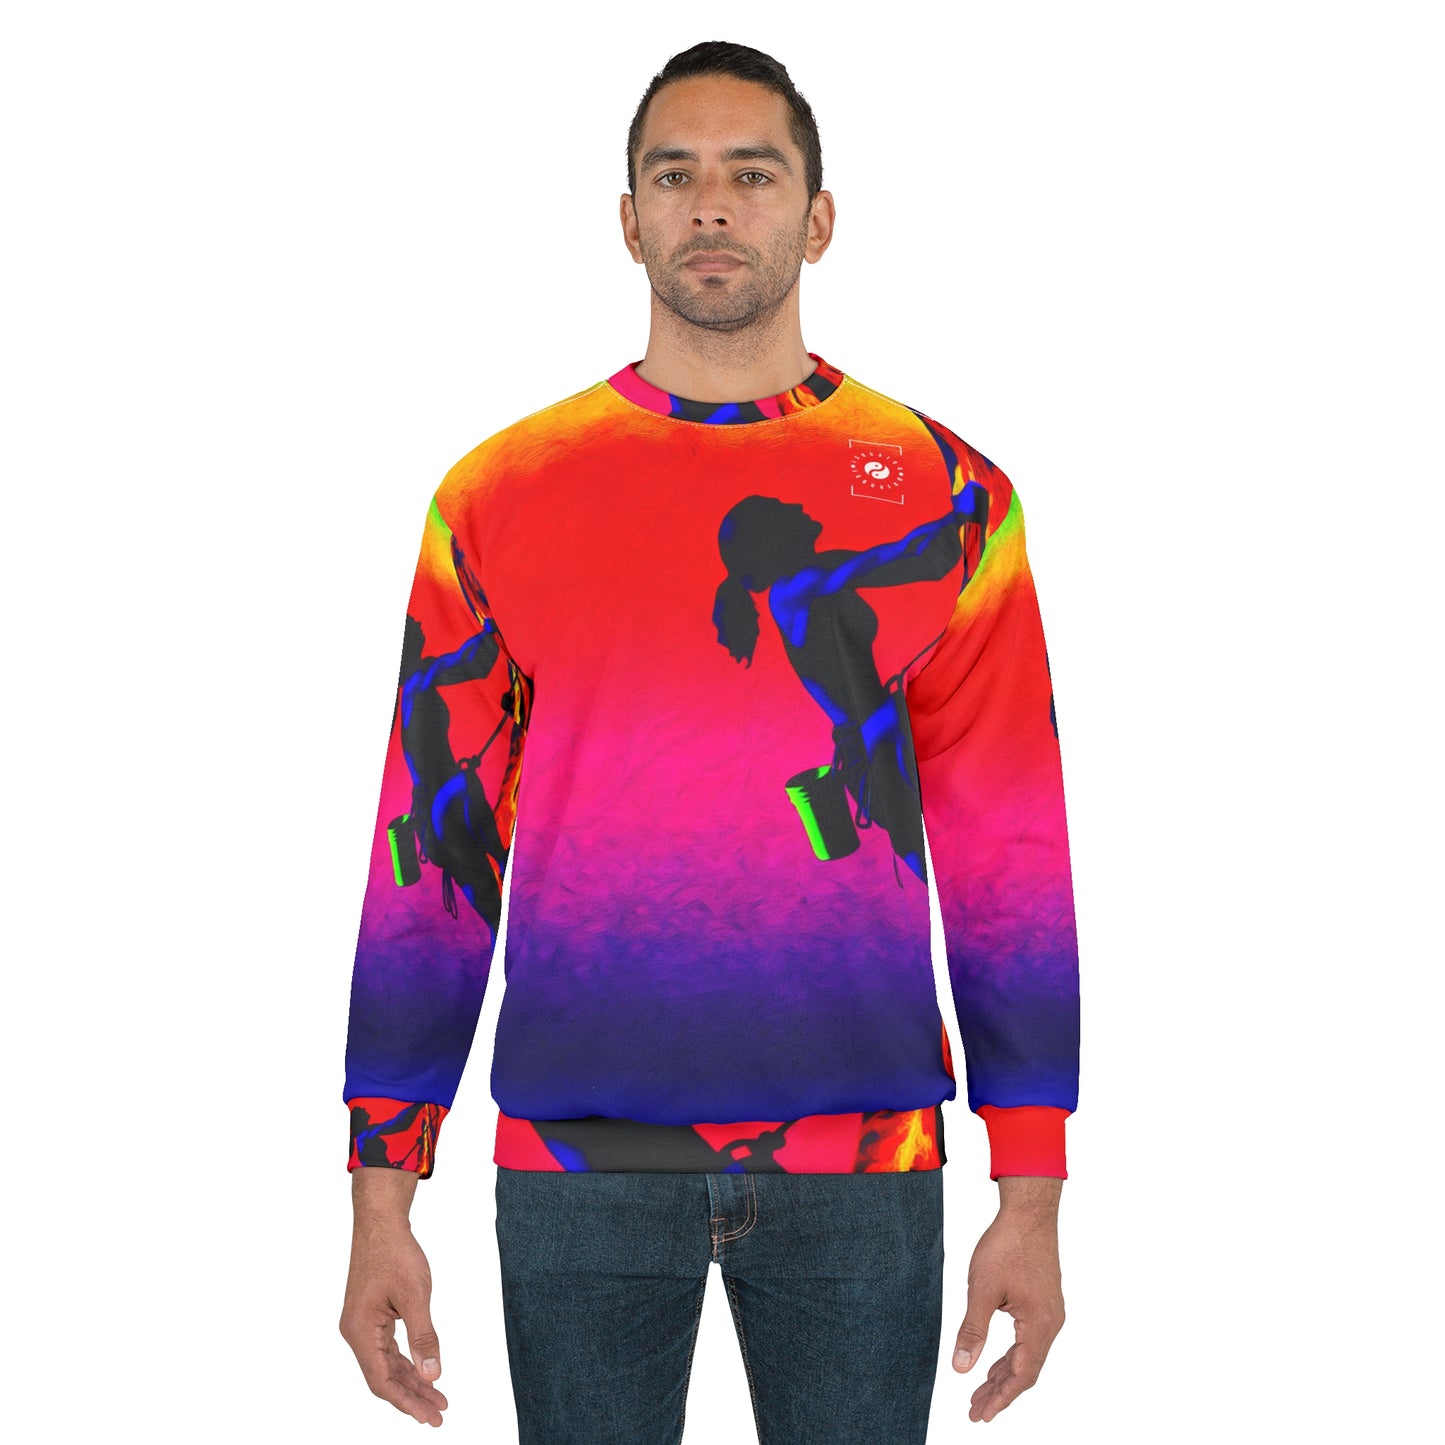 « Technicolor Ascent : The Digital Highline » - Sweat-shirt unisexe